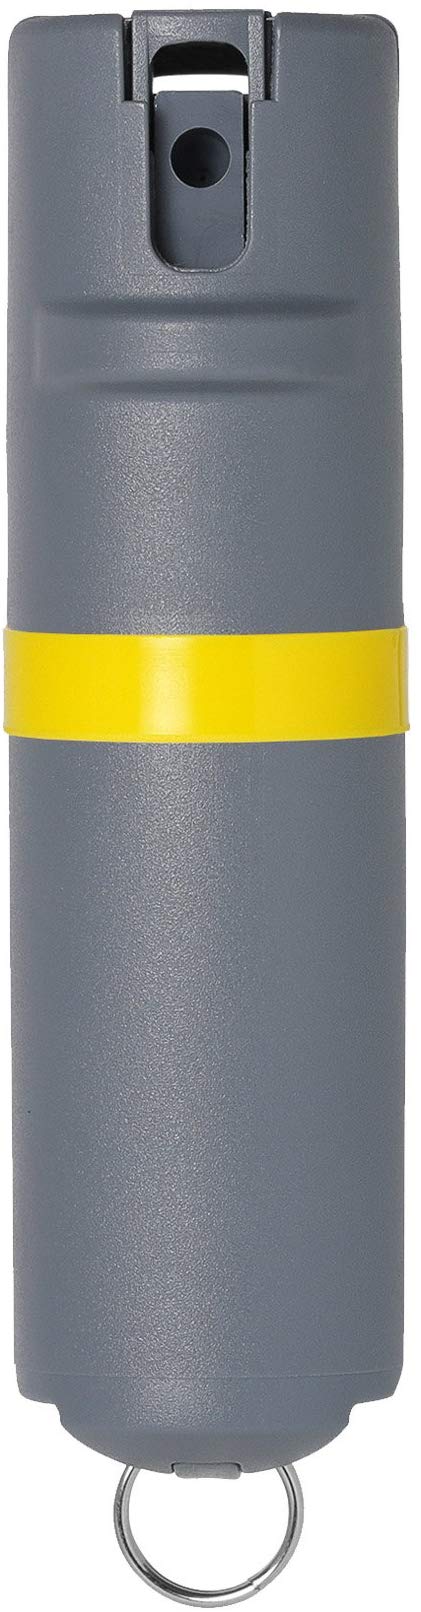 POM White Pepper Spray Keychain Model - Maximum Strength Self Defense OC Spray Safety Flip Top 10ft Range Compact Discreet for Keys Backpack Quick Key Release (Grey)